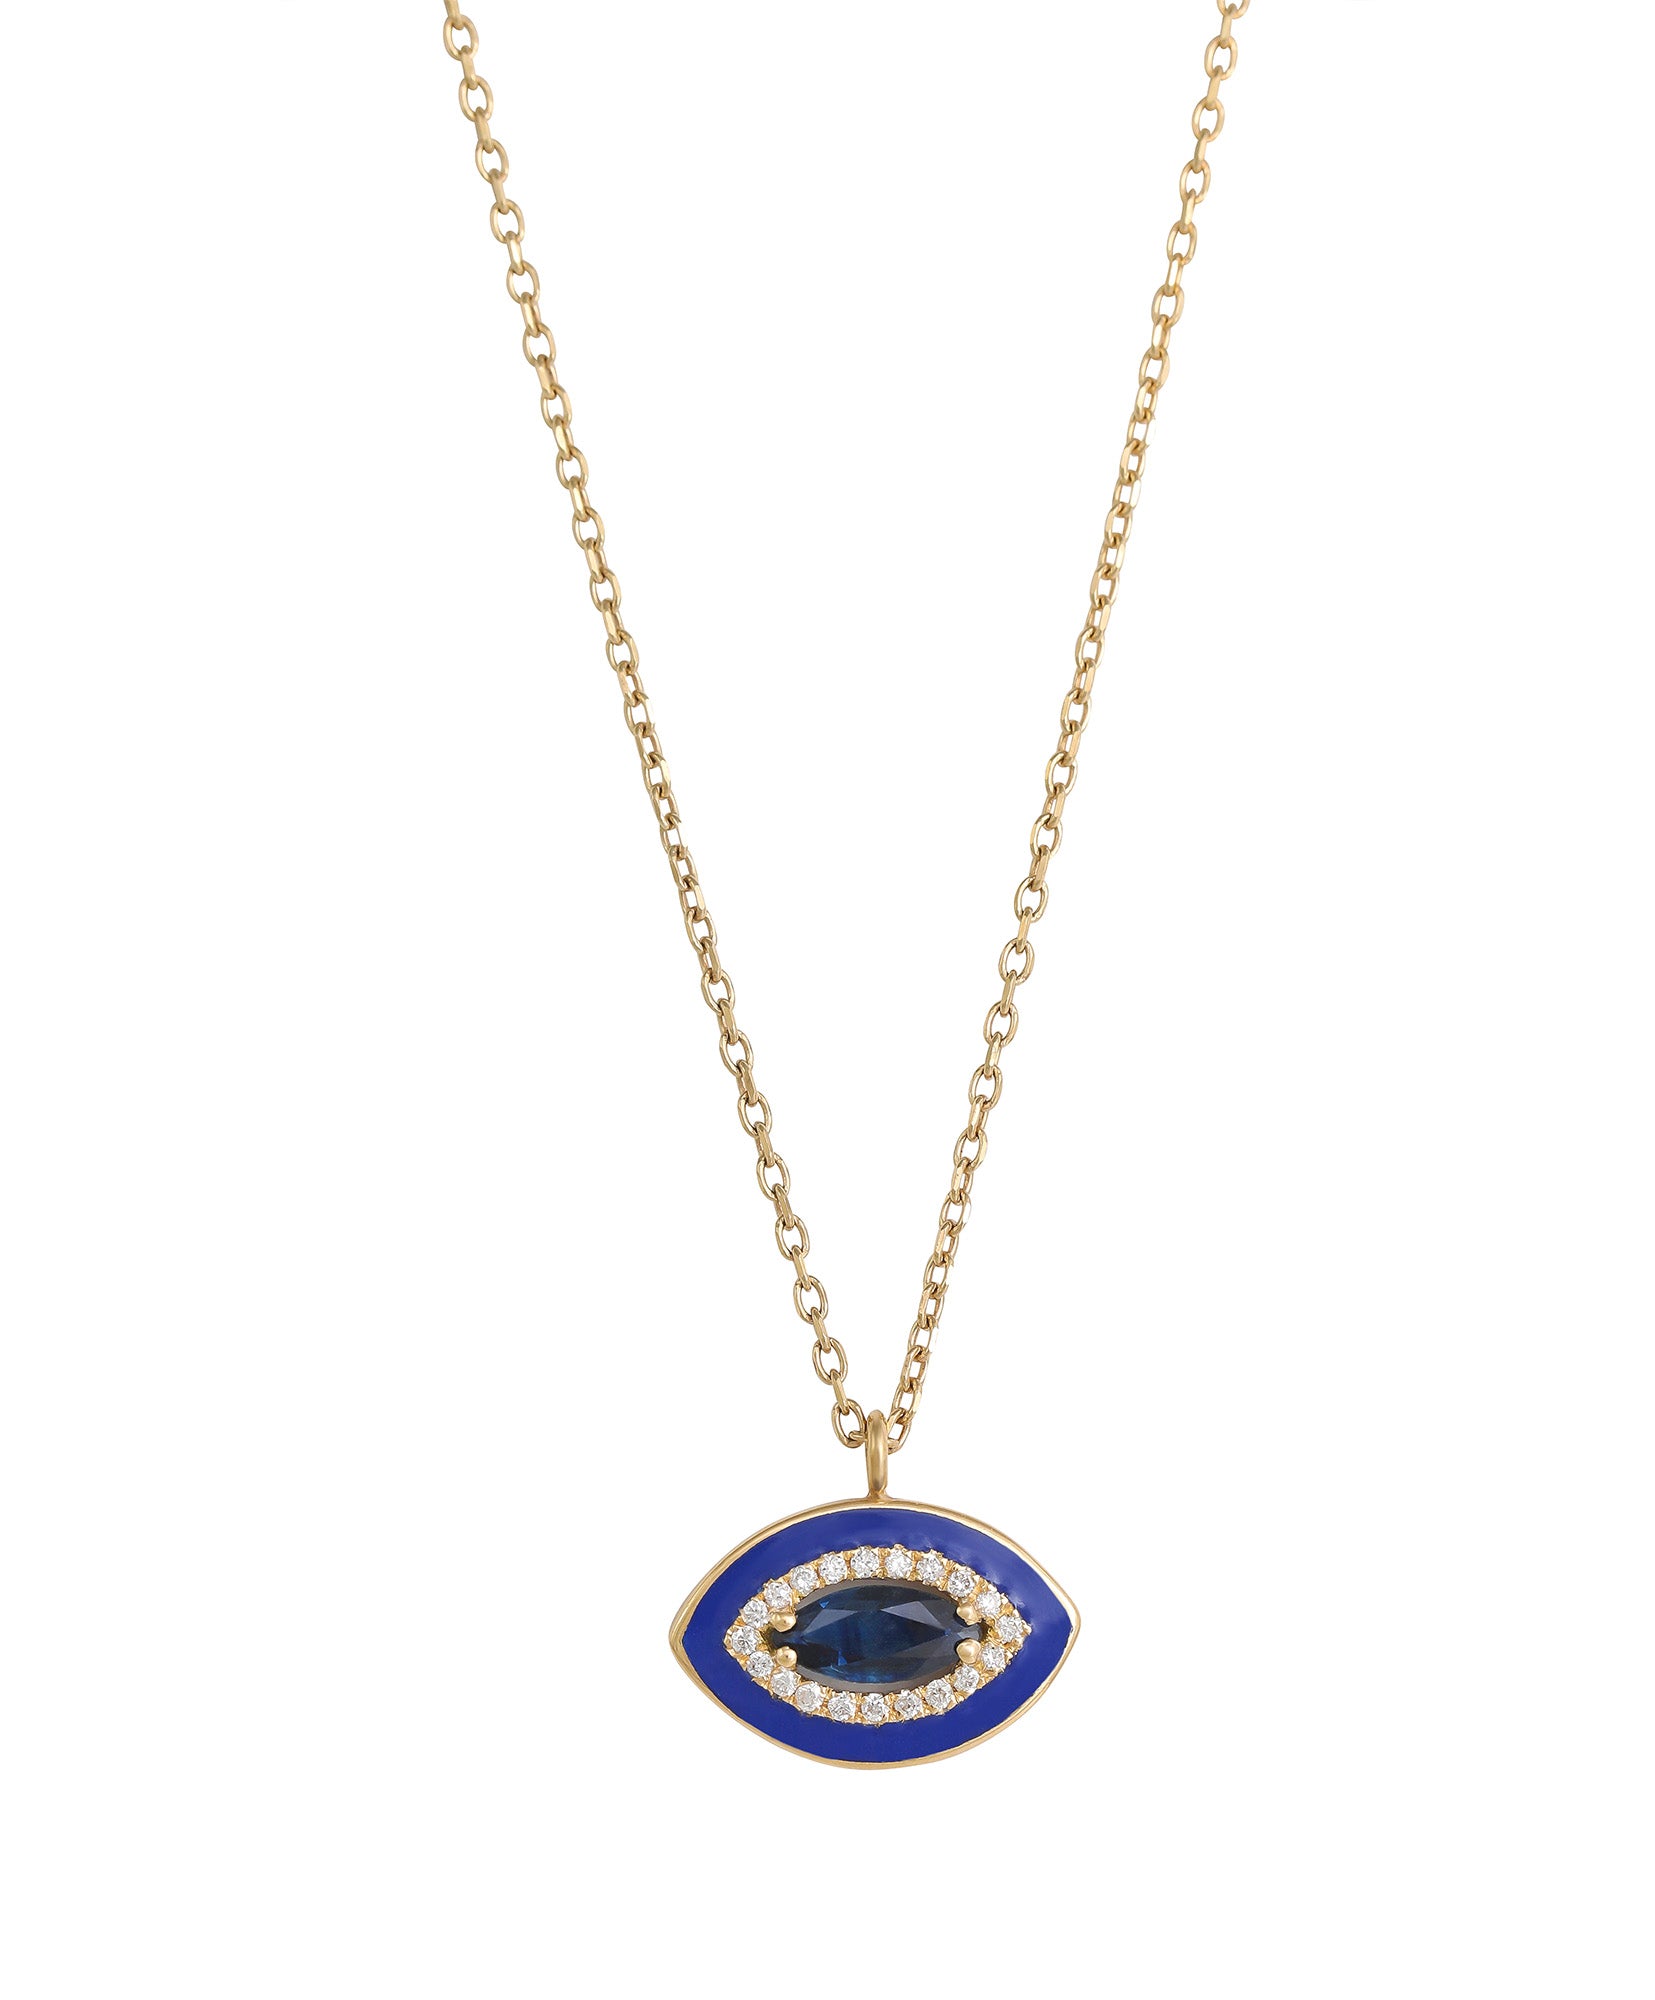  J by Boghossian, necklace, white diamond, gold, sapphire, navy blue enamel